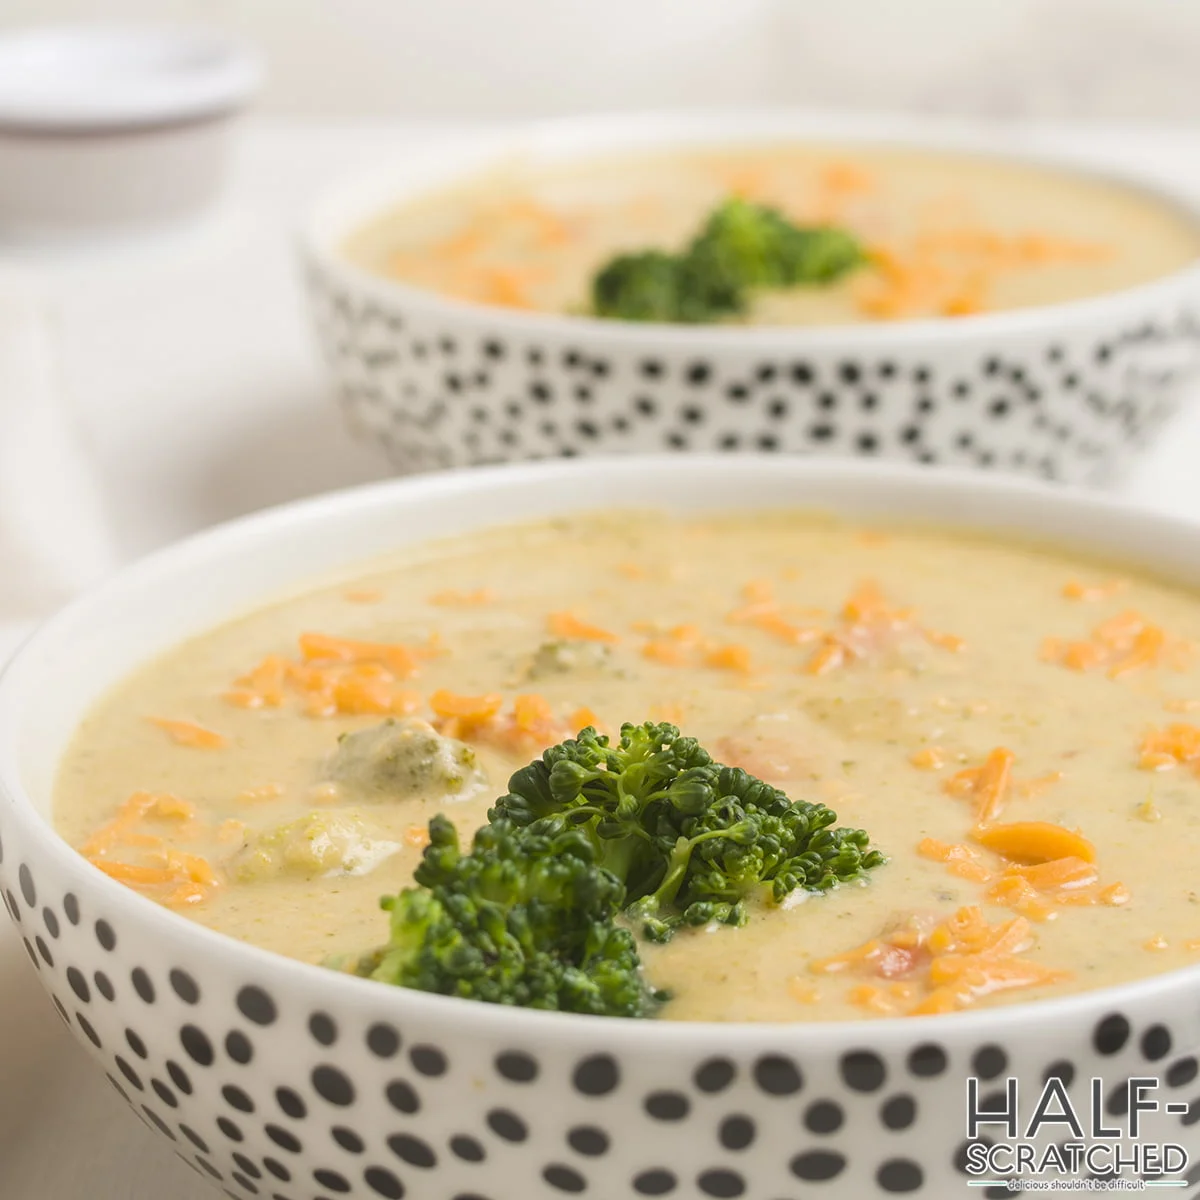 Ina Garten's Broccoli Cheddar Soup recipe